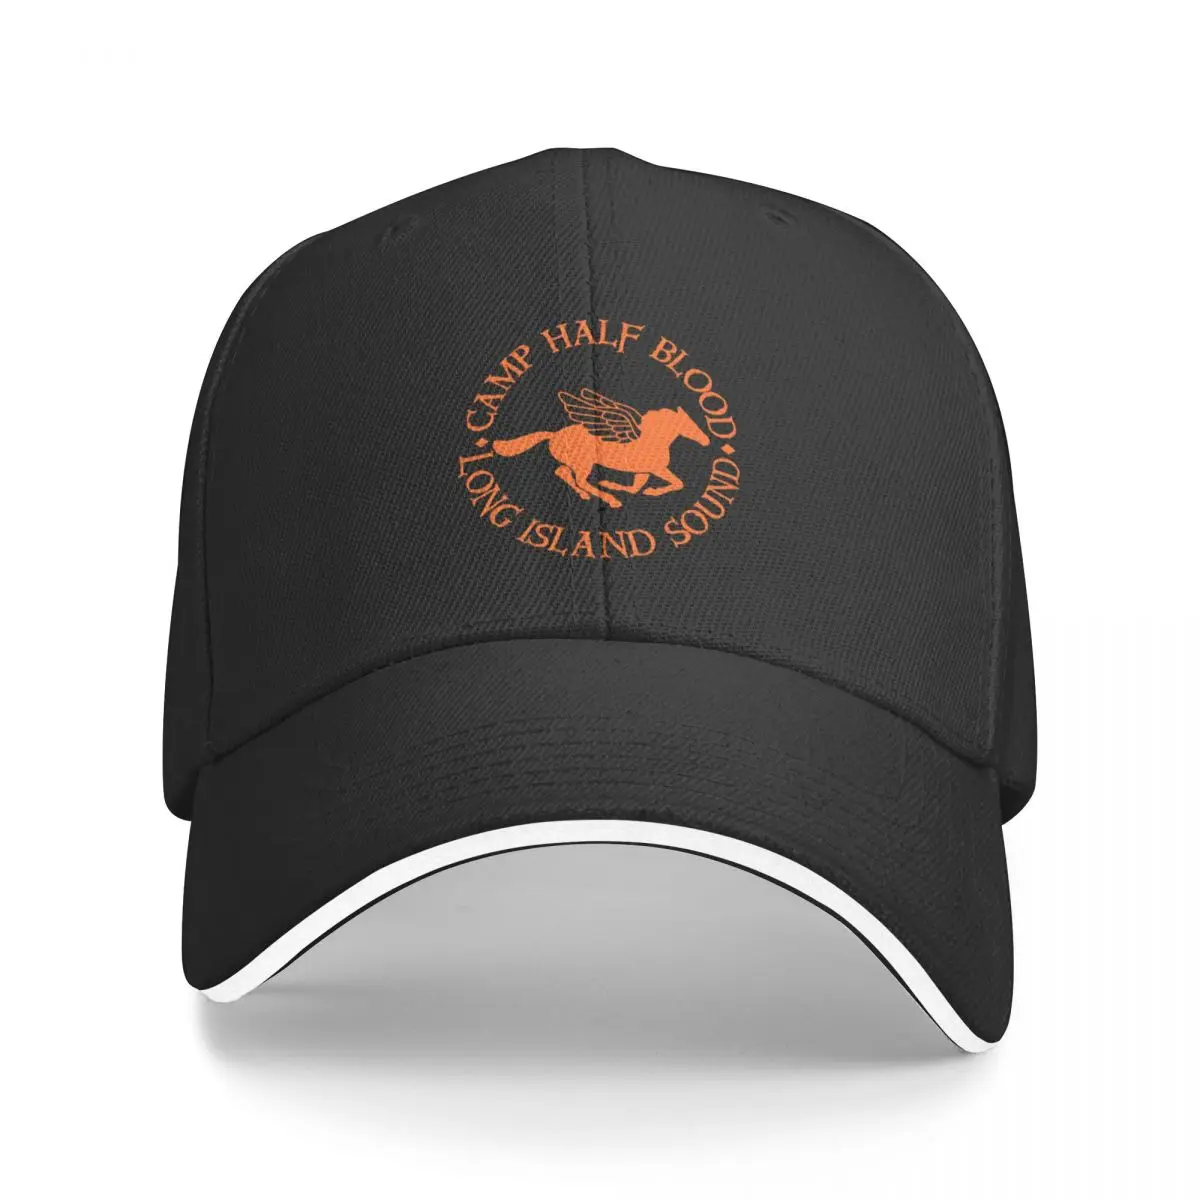 Бейсболка New Camp half blood long island Sound, рыболовная шляпа |-F-| Rave, мужская шляпа роскошного бренда, женская кепка